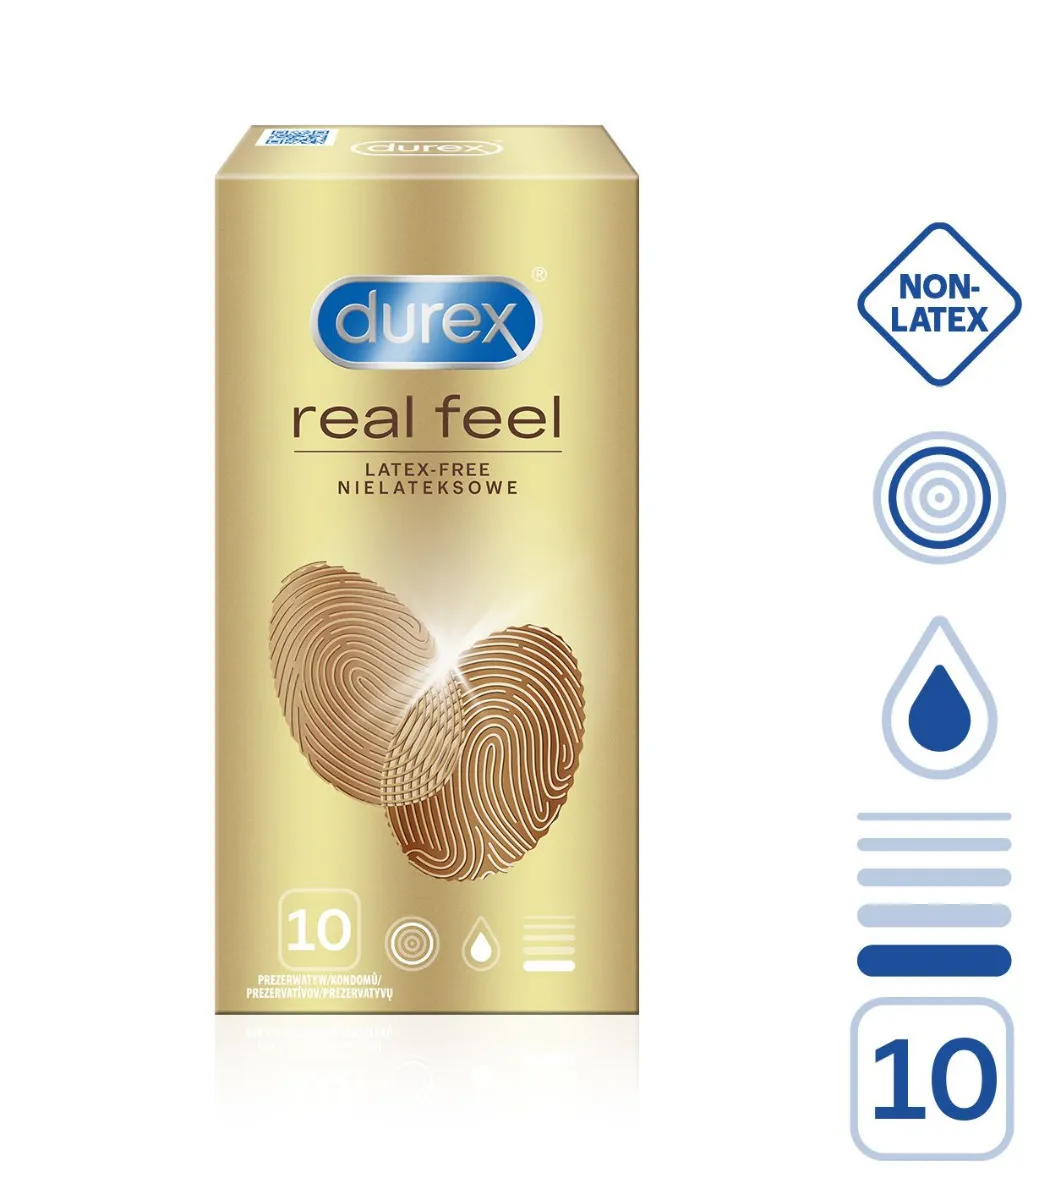 Durex Real Feel kondomy 10 ks